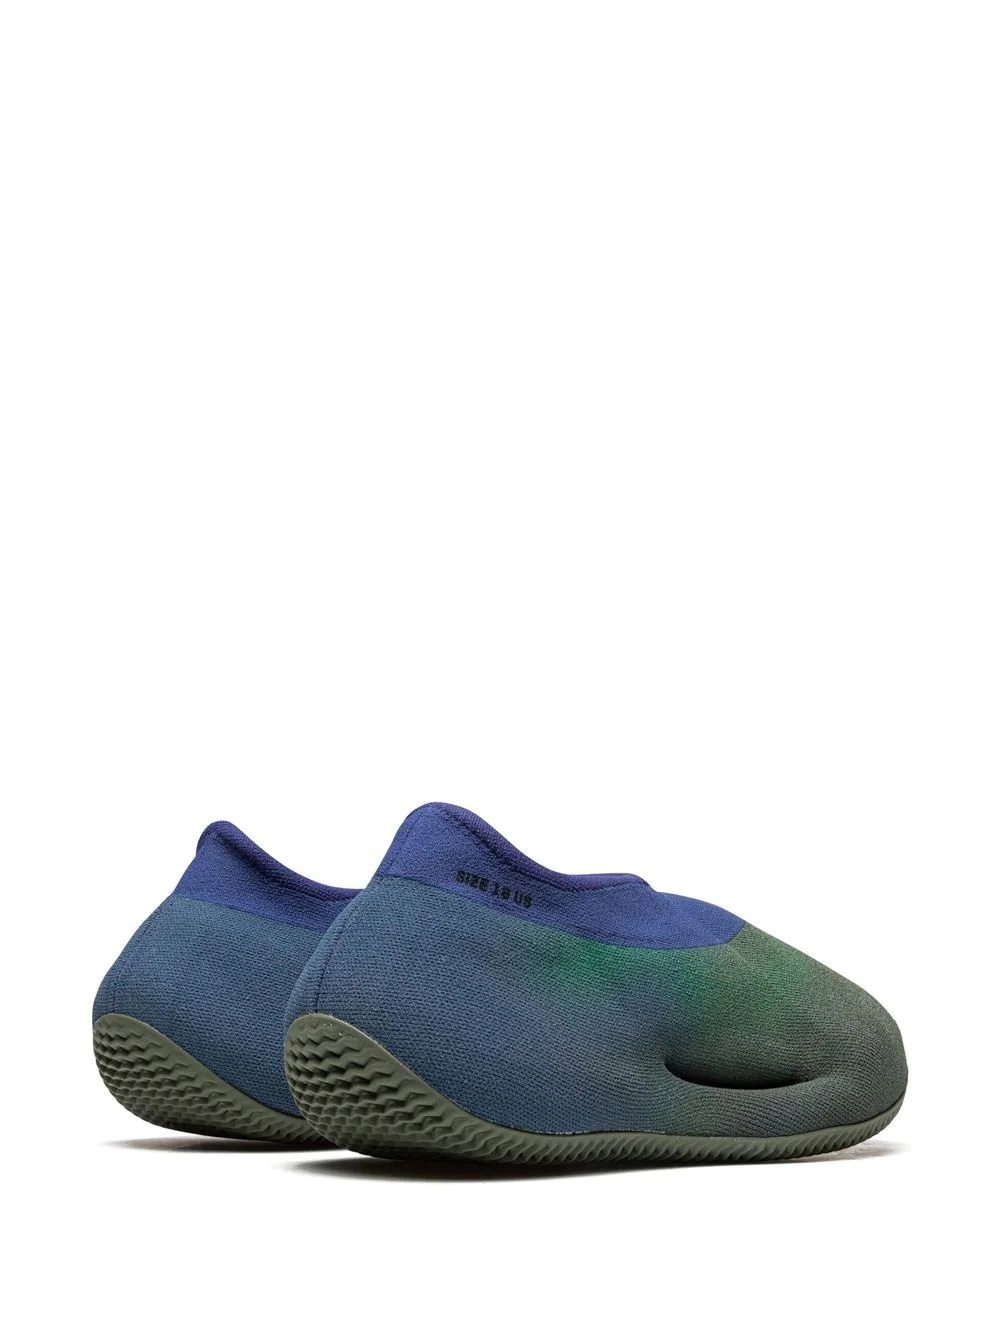 YEEZY Knit Runner "Faded Azure" sneakers - 3